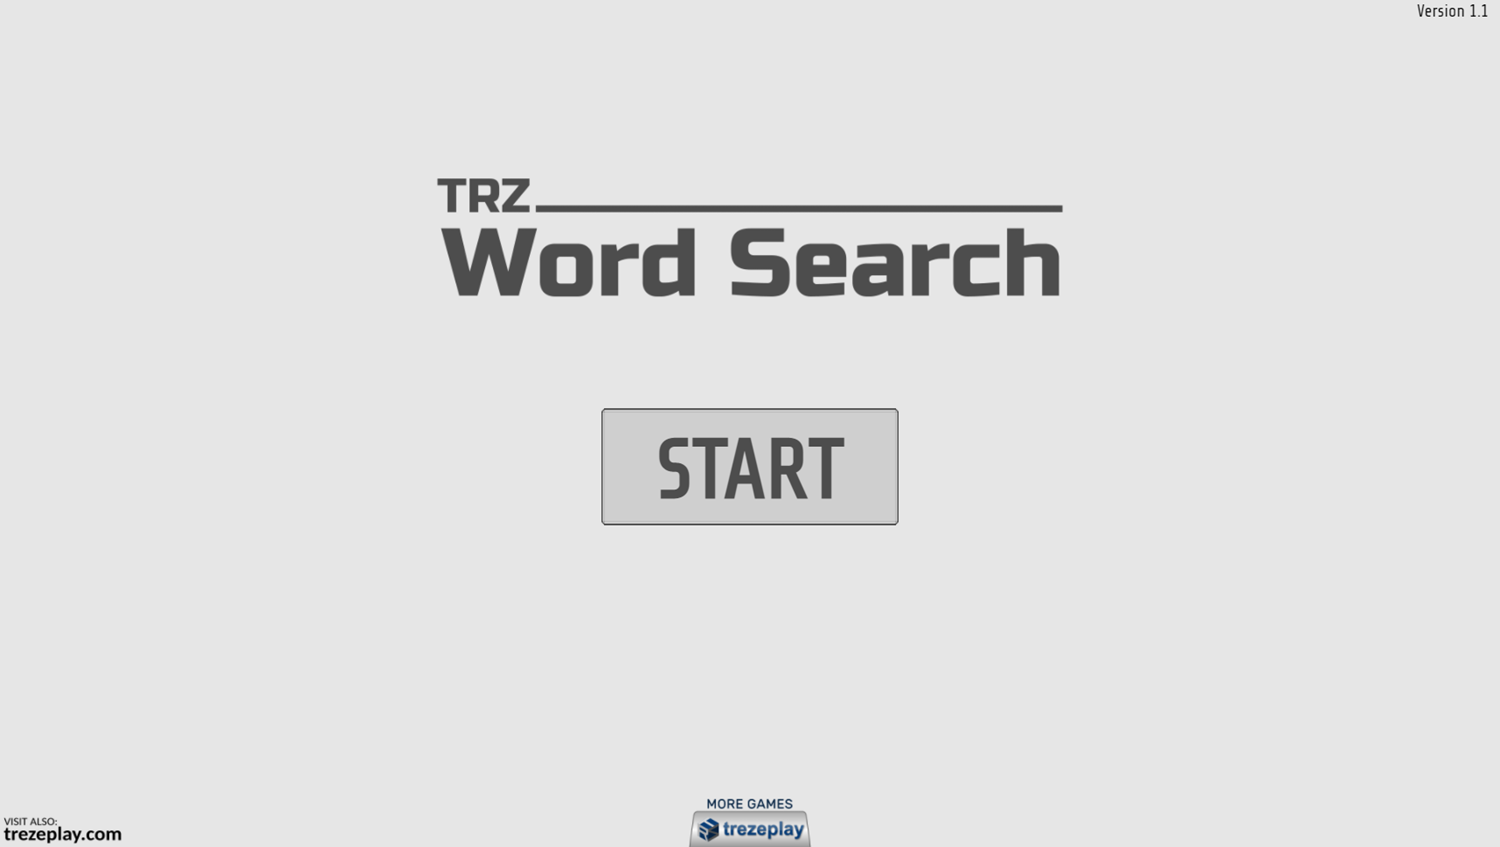 TRZ Word Search Game Welcome Screen Screenshot.